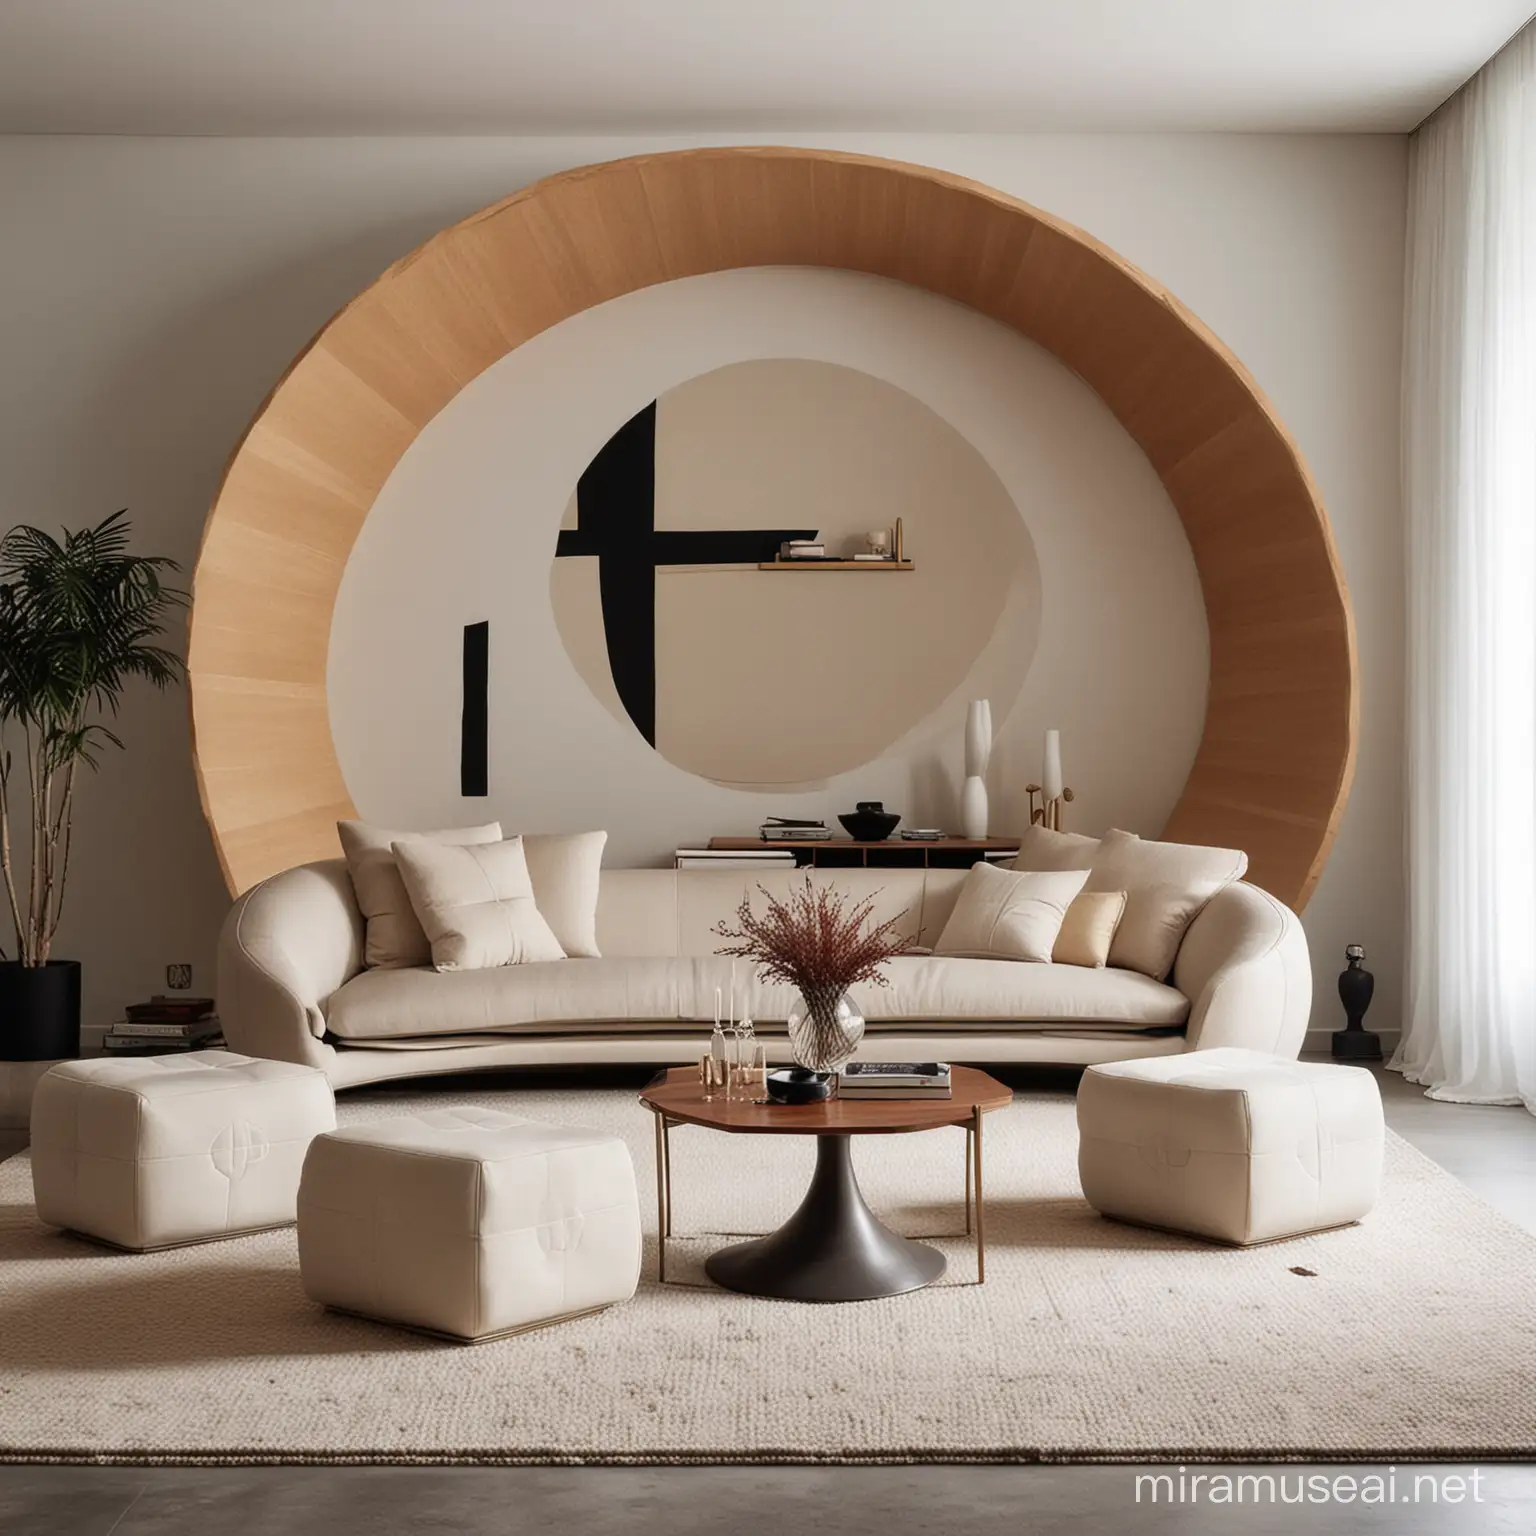 Geometric Furniture Collection in Parisian Setting